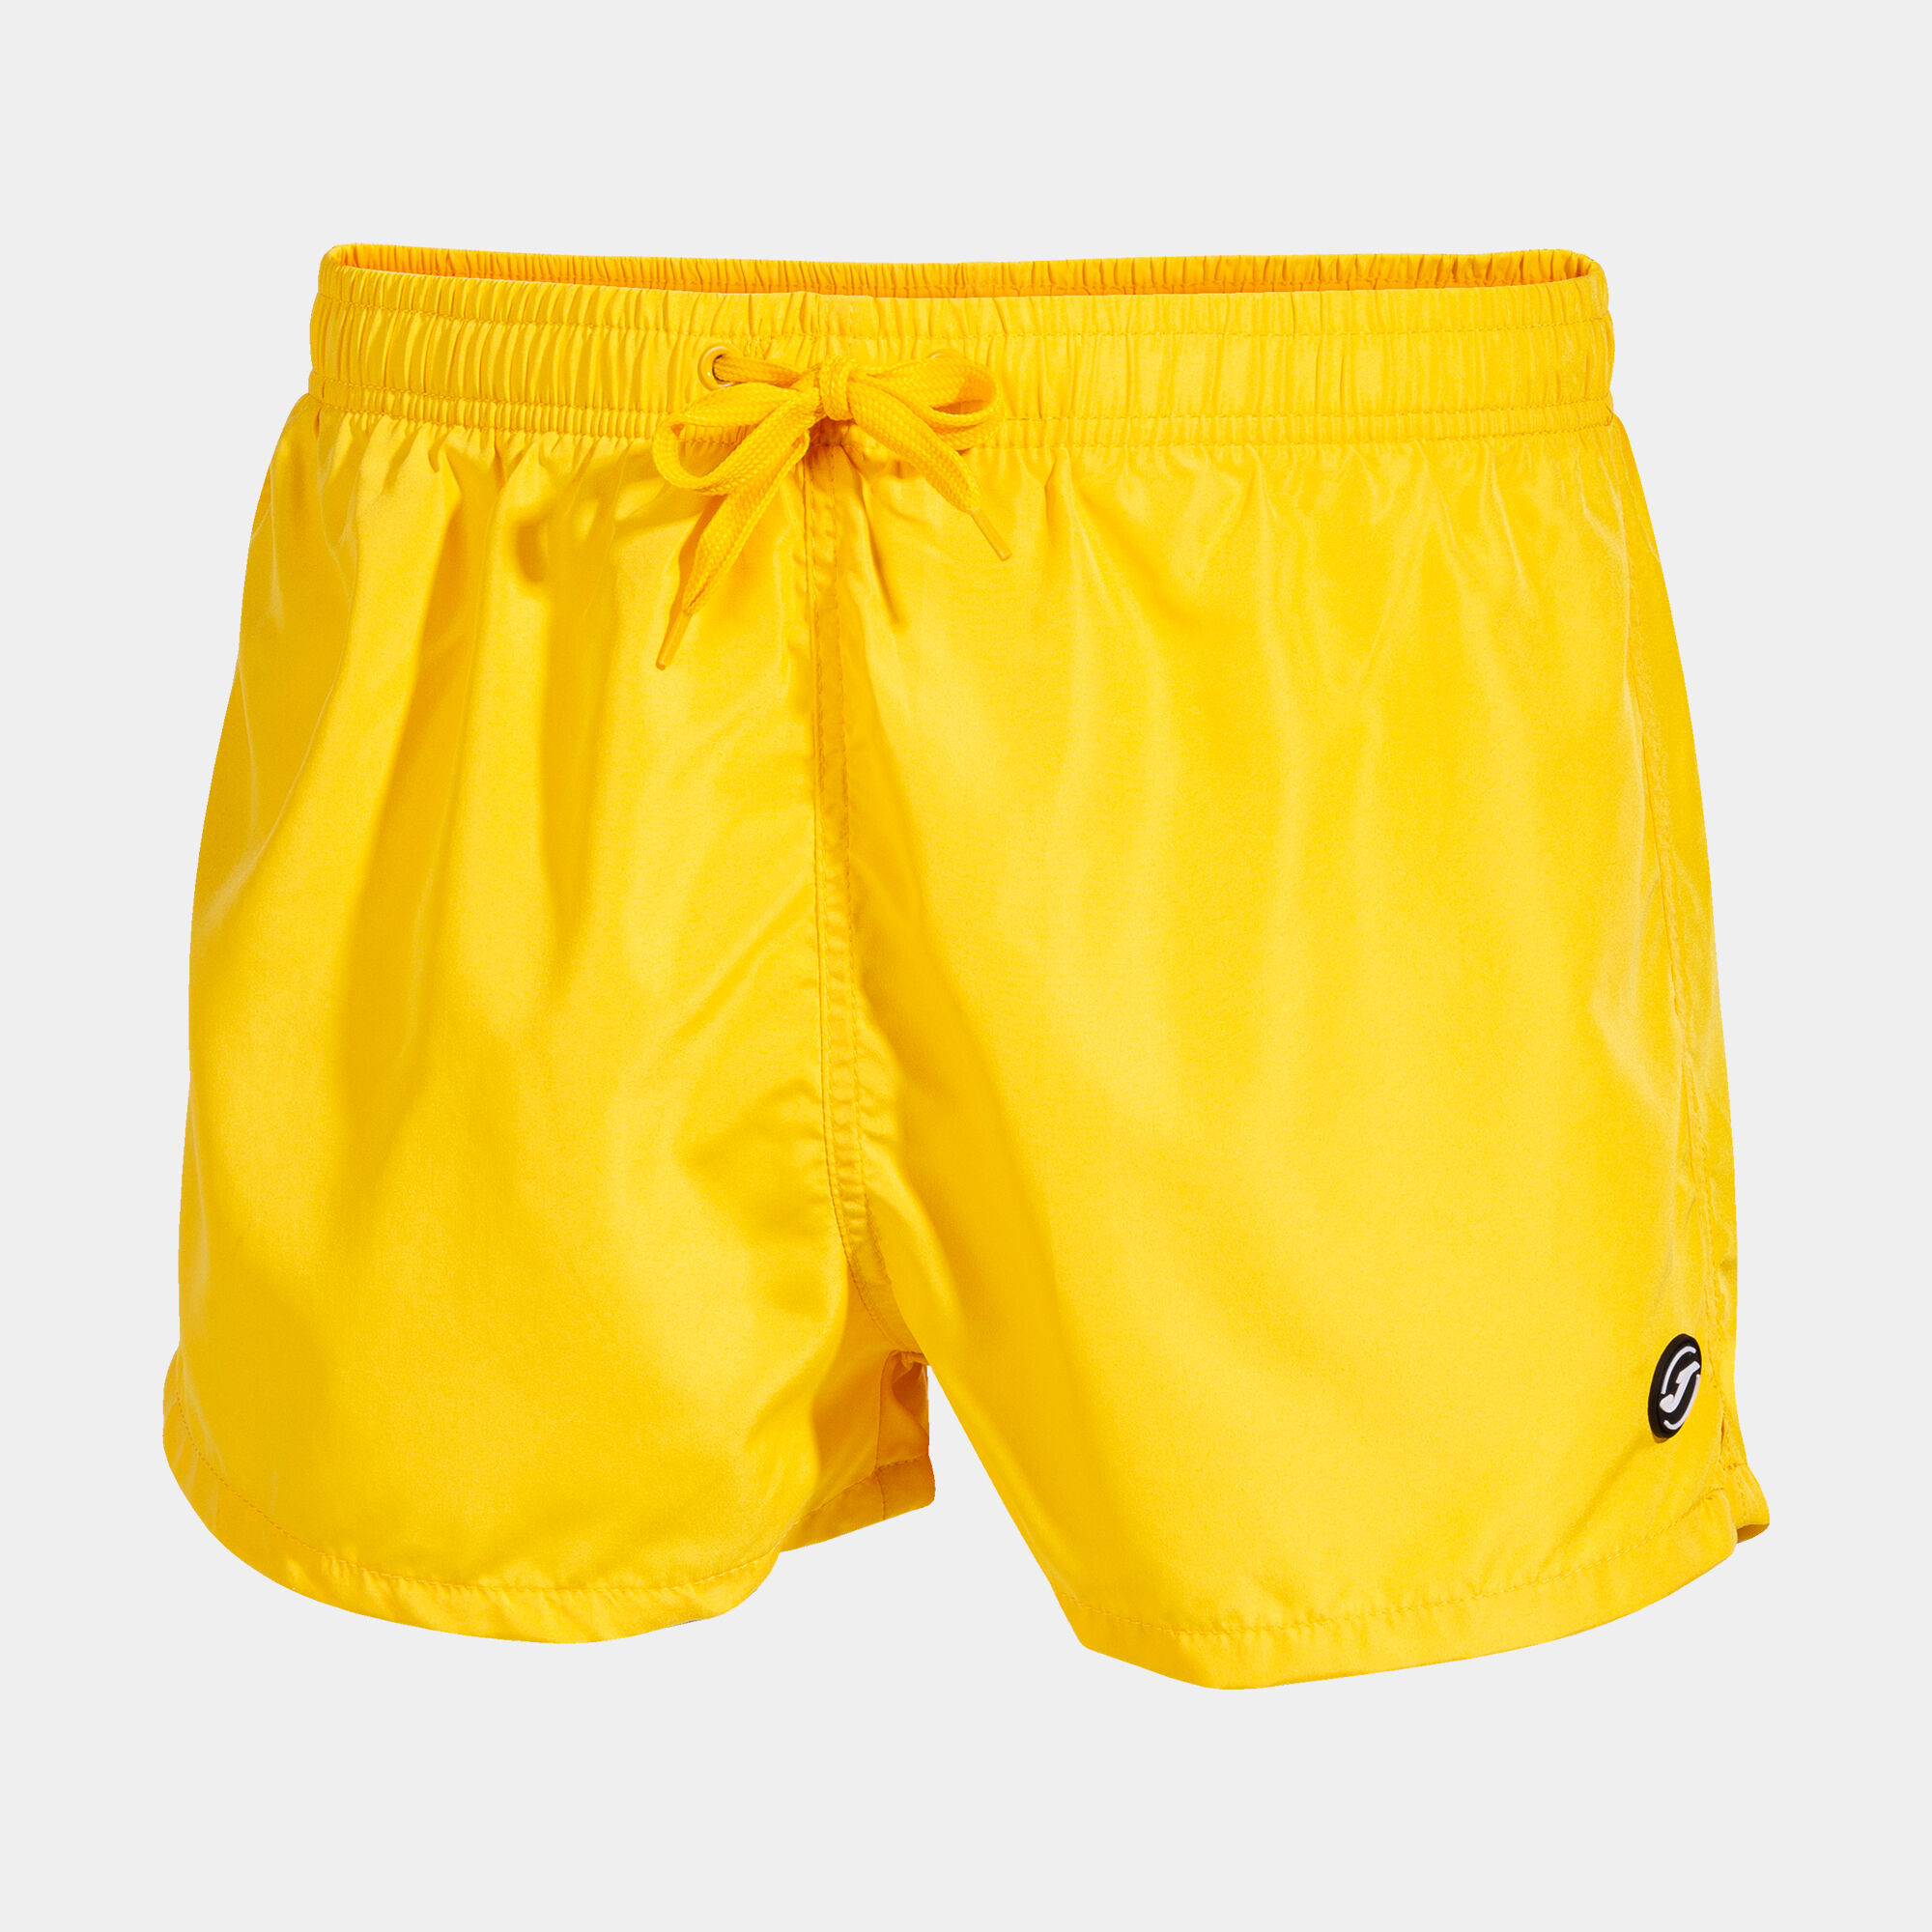 Swimming trunks man Arnao yellow